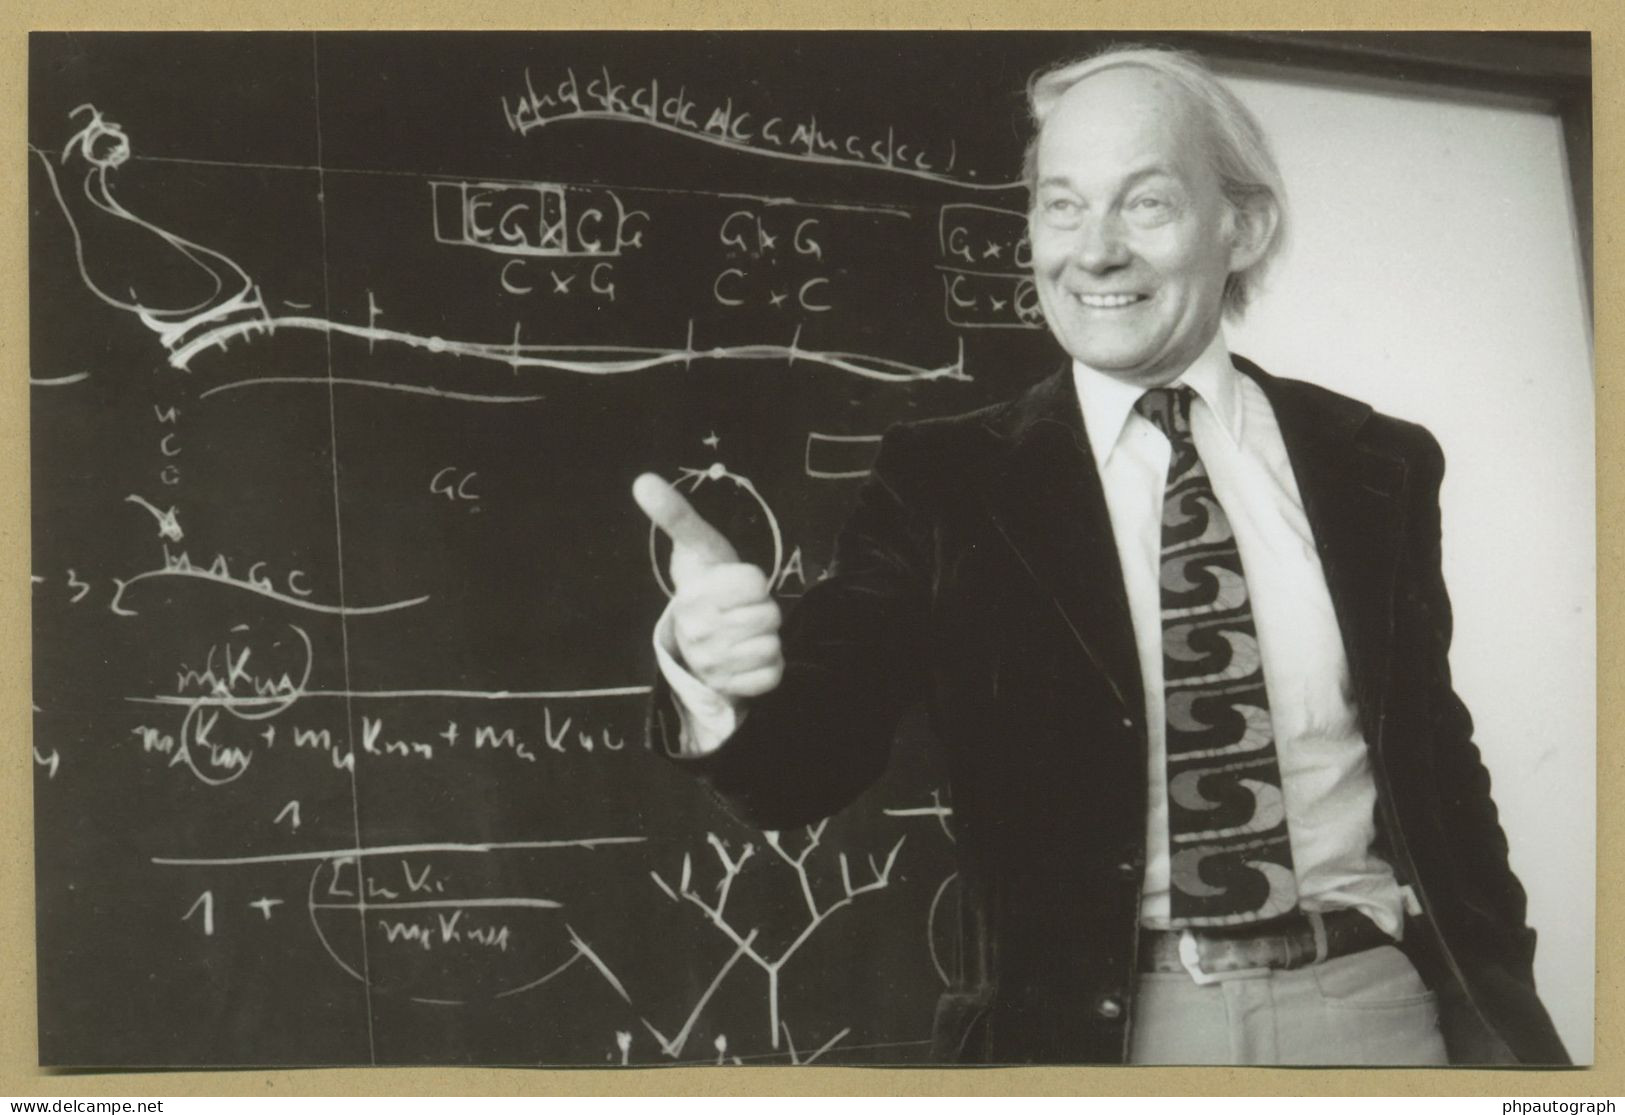 Manfred Eigen (1927-2019) - Biophysical Chemist - Signed Card + Photo - 1982 - Nobel Prize - Inventeurs & Scientifiques